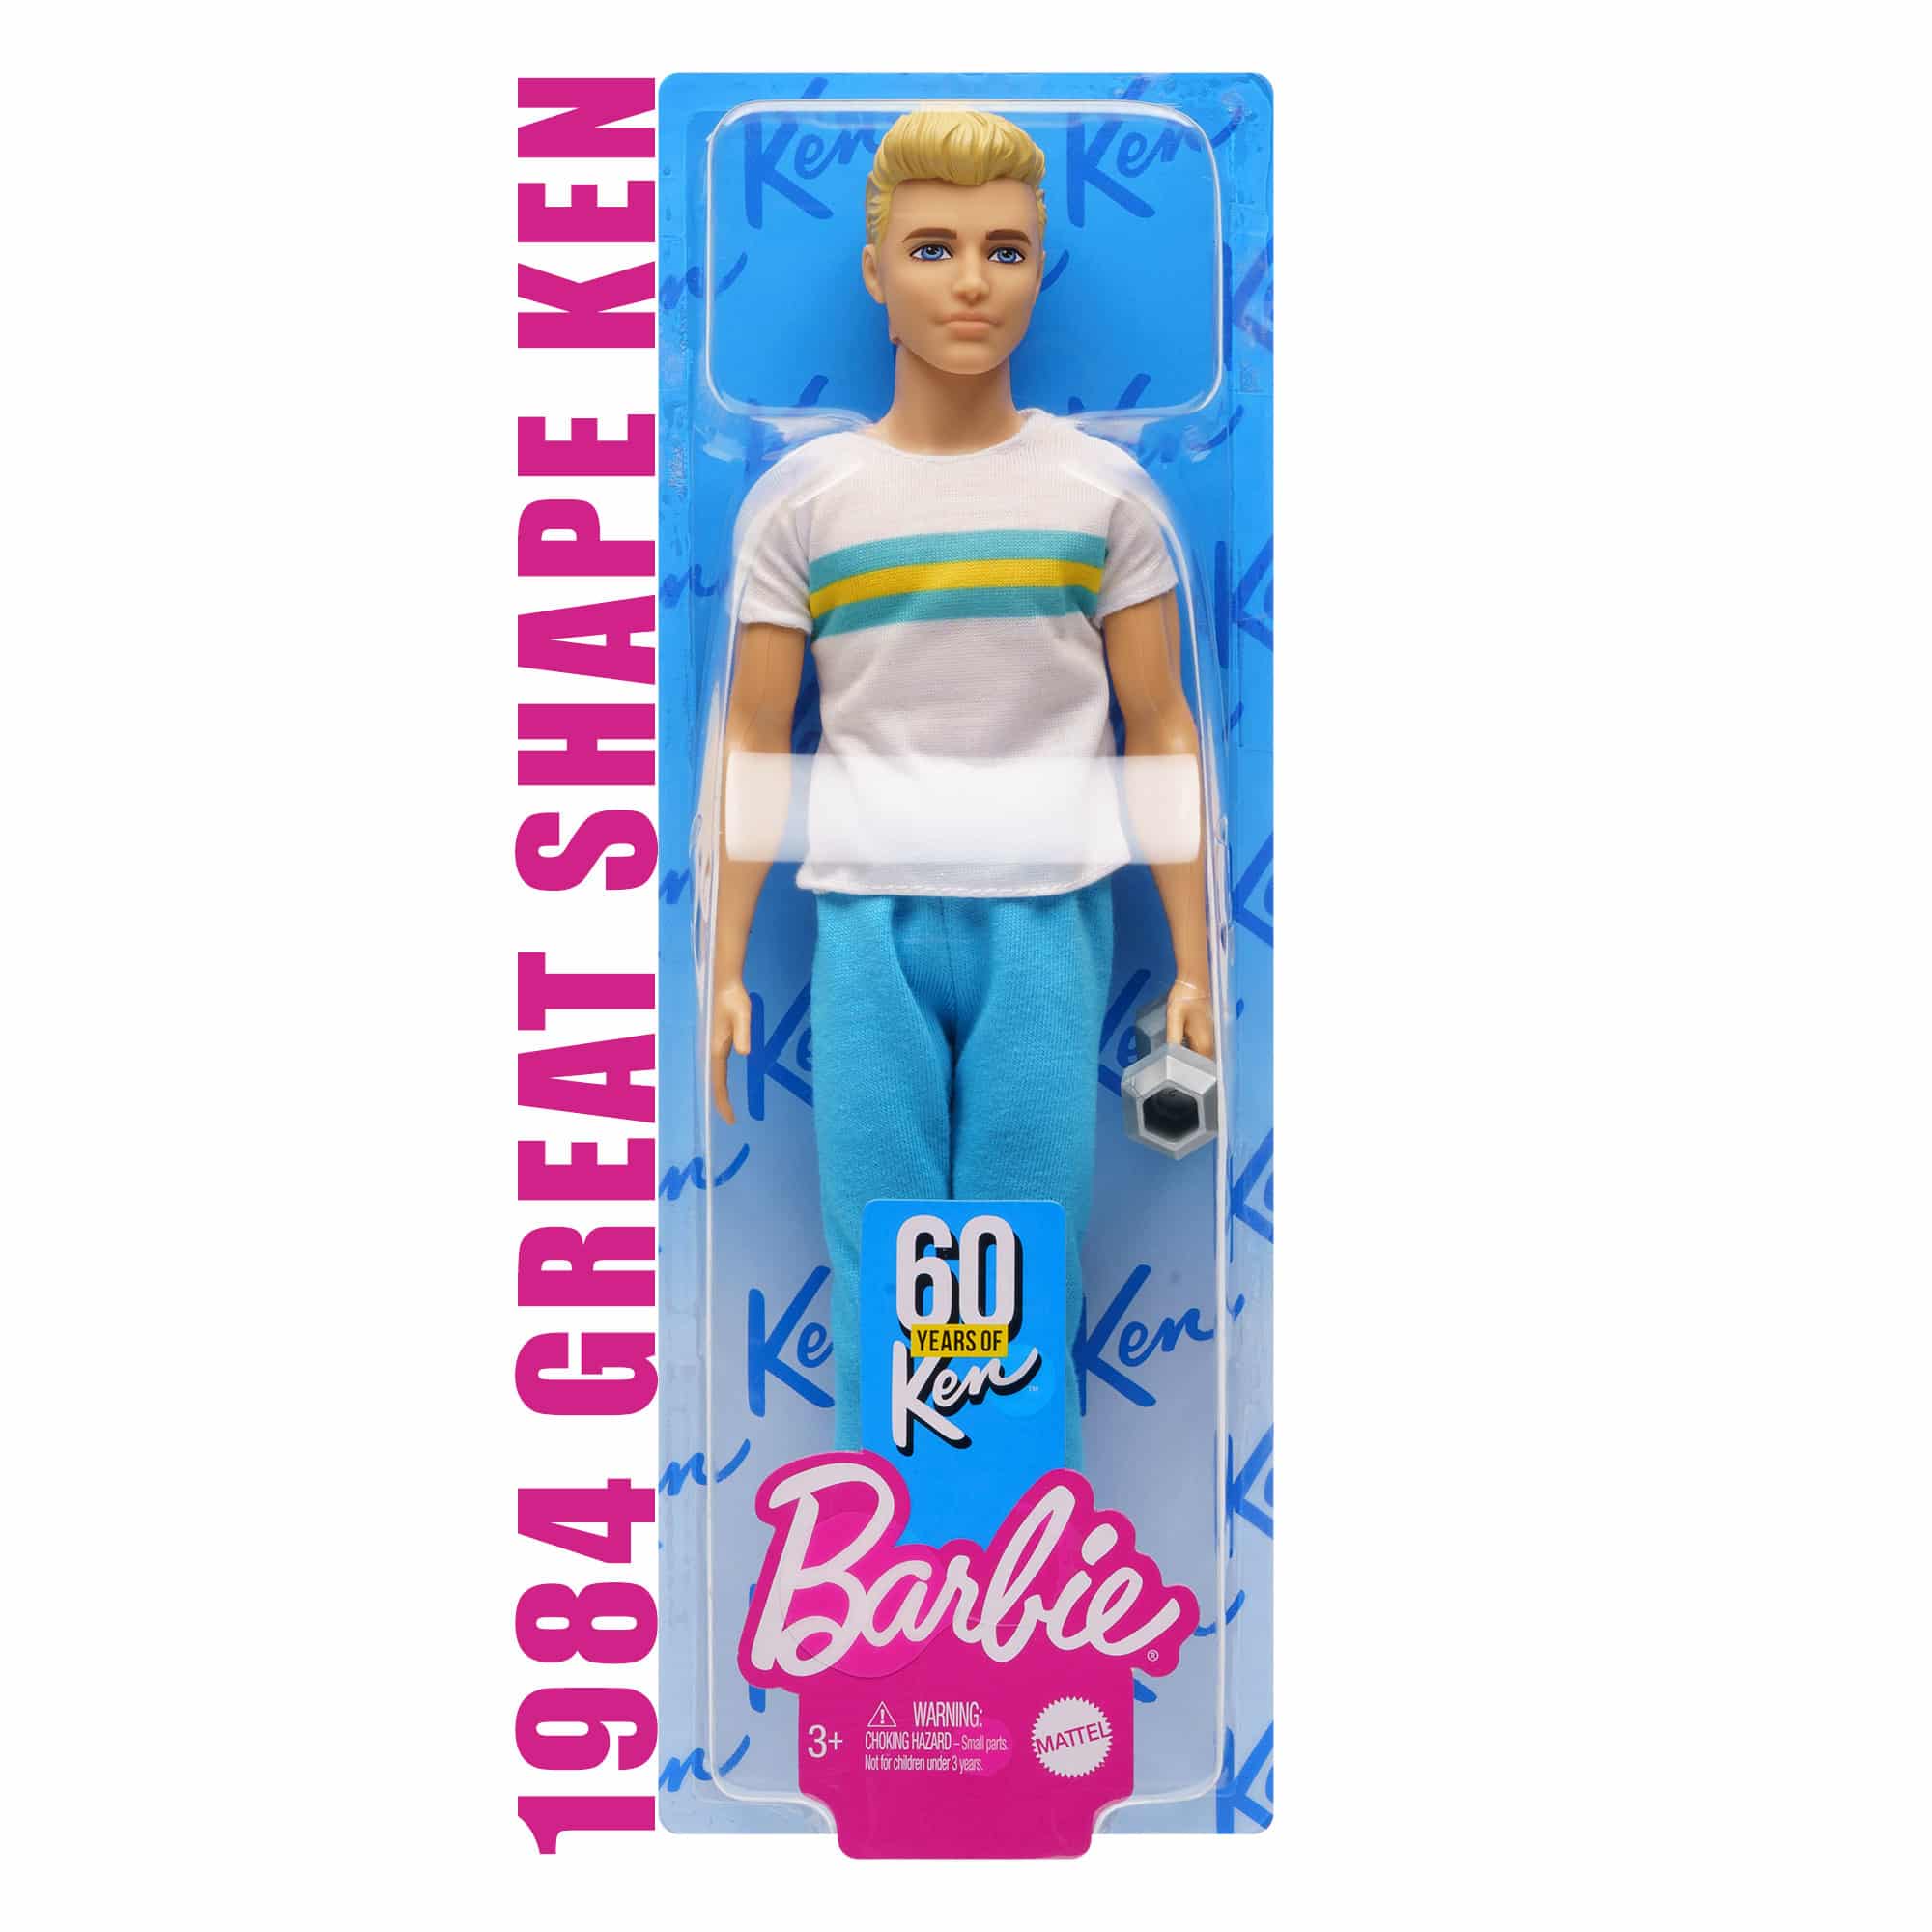 Barbie - 60th Anniversary Ken Doll Assortment